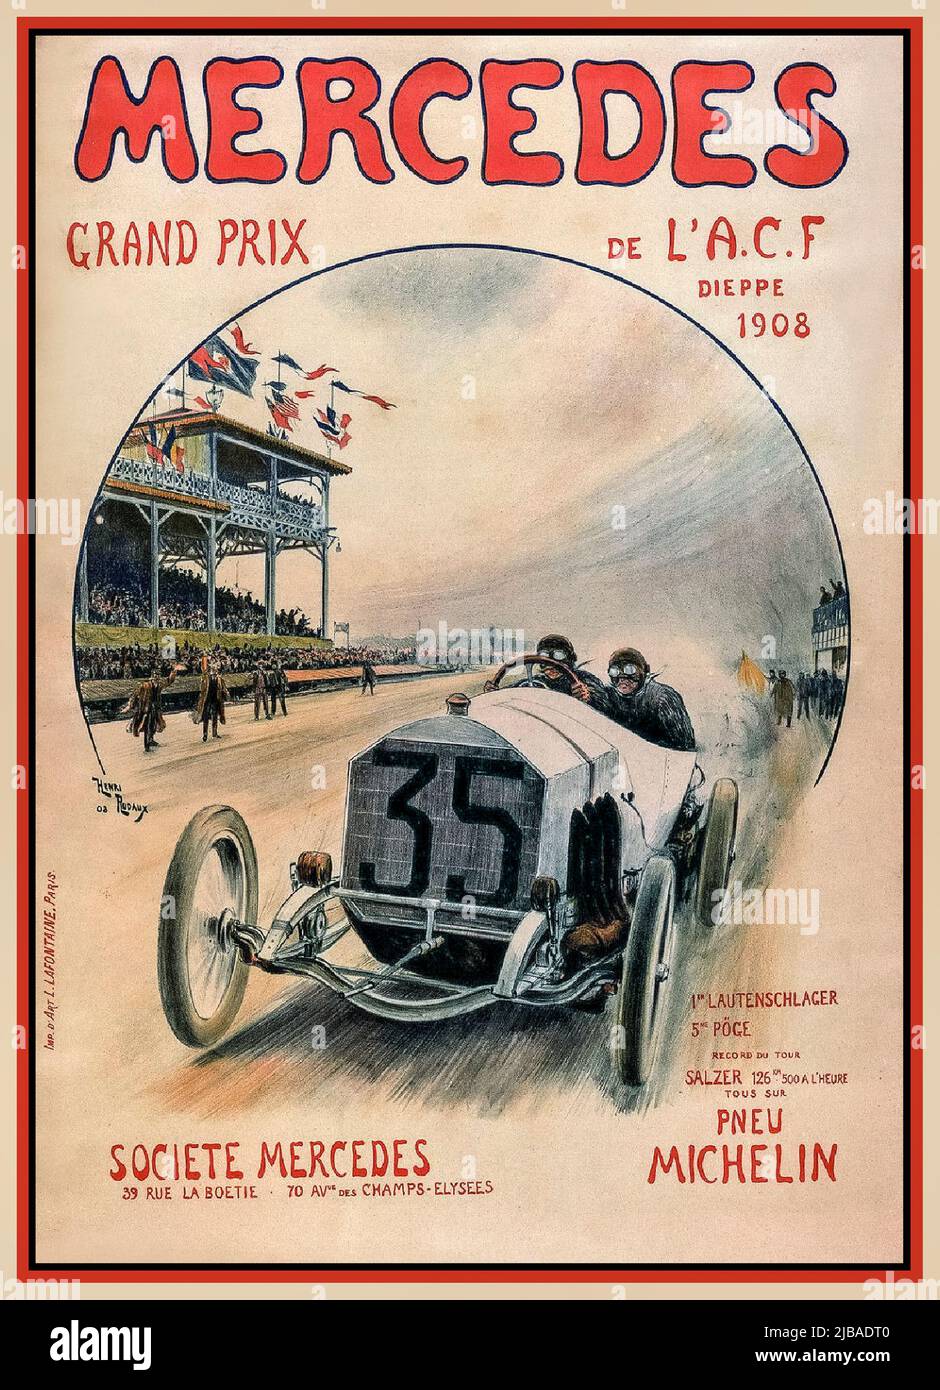 Mercedes Vintage Número 35 Gran Premio 1908 Cartel de L'ACF Dieppe Pneu Michelin, Societe Mercedes. Francia. Christian Lautenschlager en su Mercedes ganador número 35 en el Gran Premio de Francia de 1908 en Dieppe. Fecha 7 de julio de 1908 Foto de stock